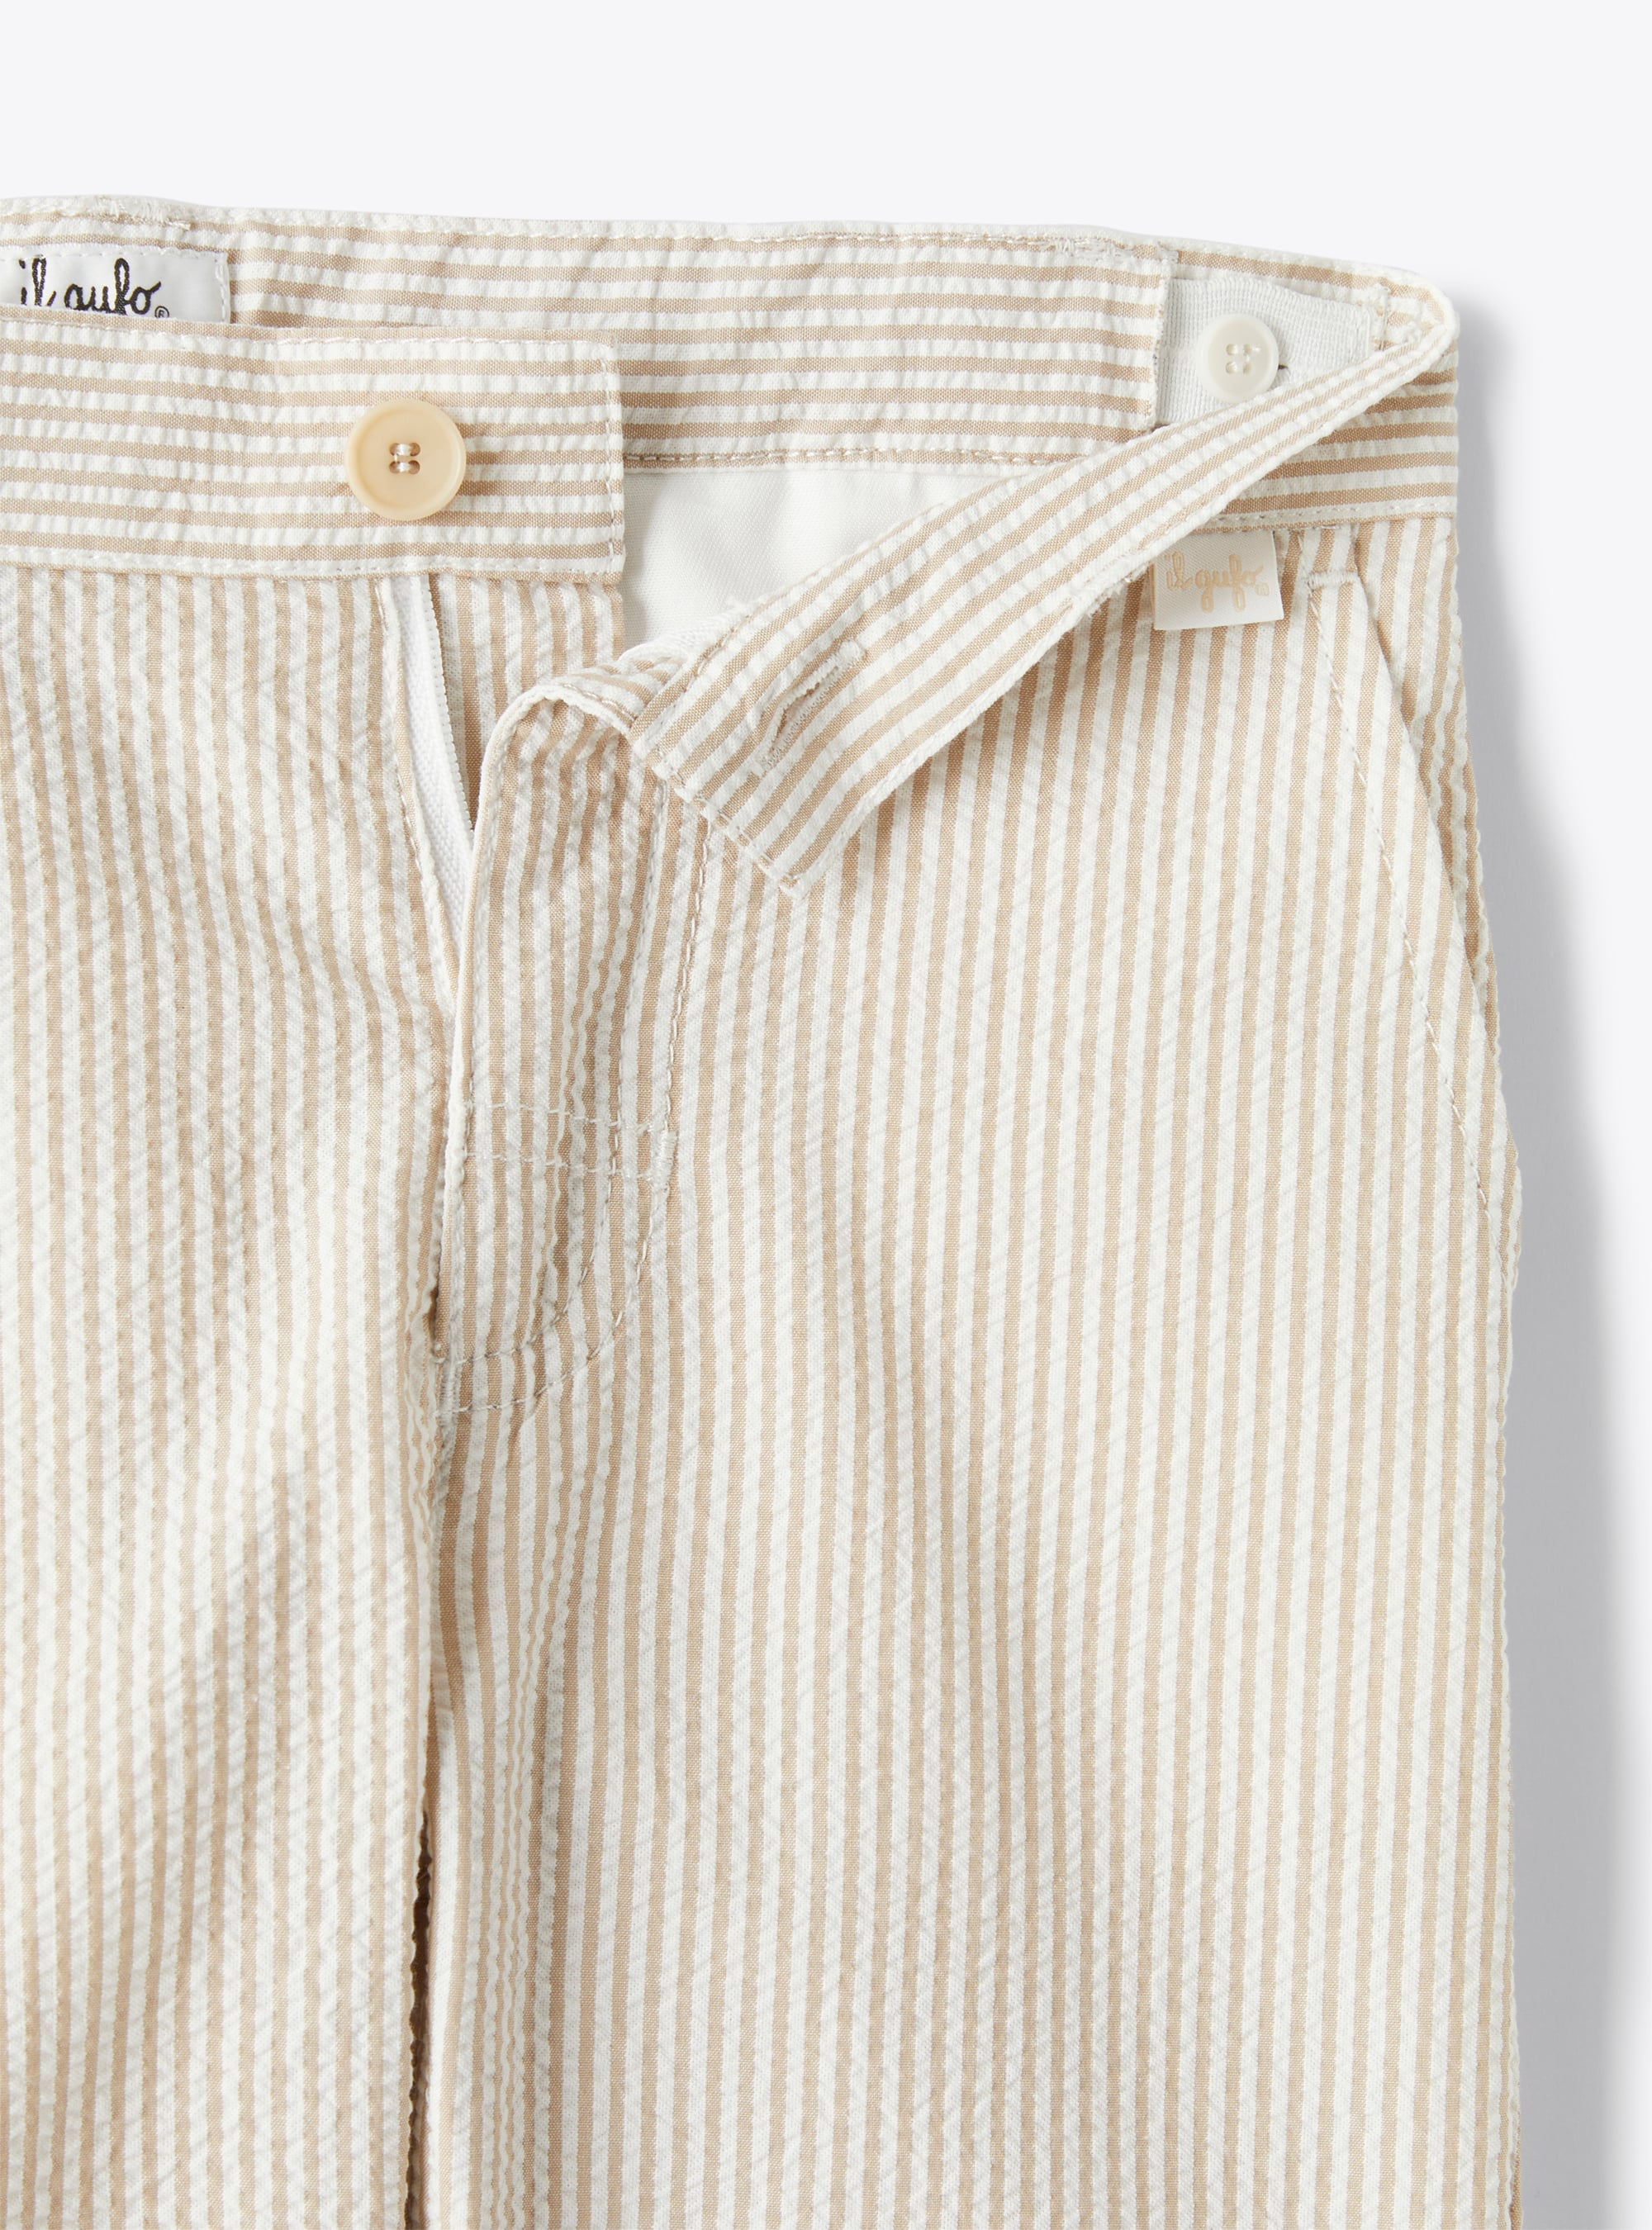 Pantalone lungo in seersucker a righe beige e bianche - Beige | Il Gufo